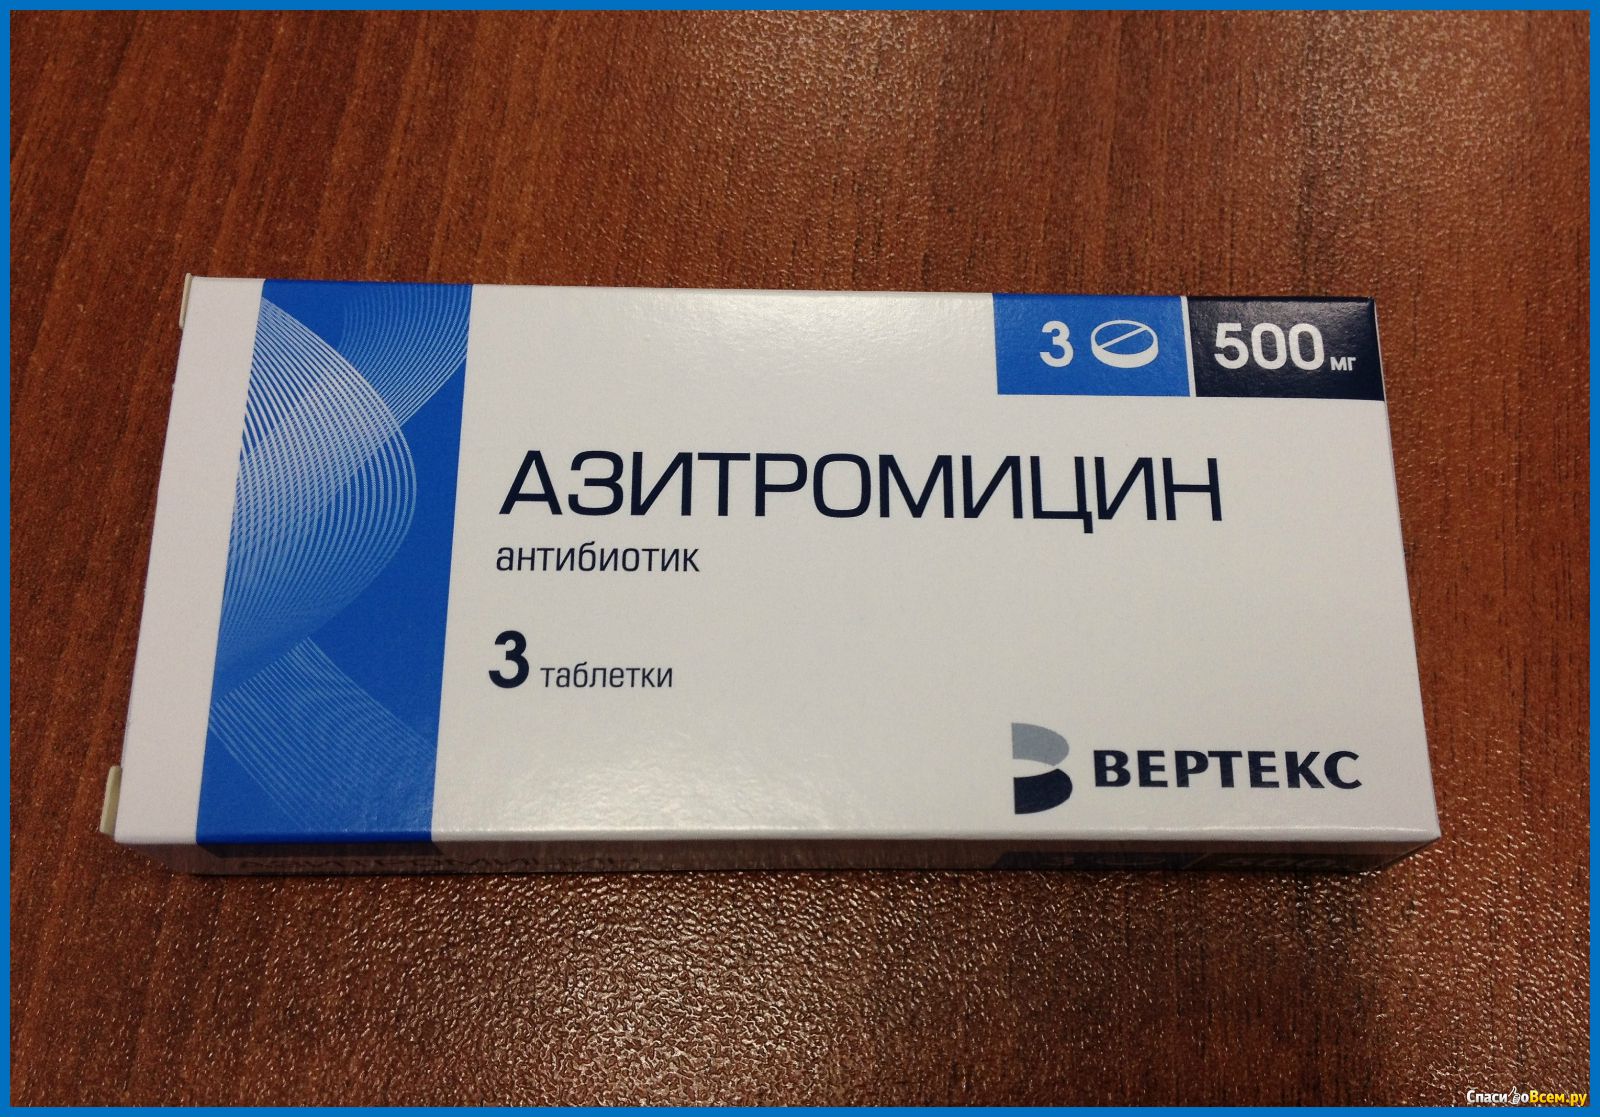 Антибиотики препараты недорогие но эффективные. Антибиотик Азитромицин 3 таблетки. Азитромицин 500 мг. Антибиотик Азитромицин 500 мг. Азитромицин 500 мг 3 таблетки.